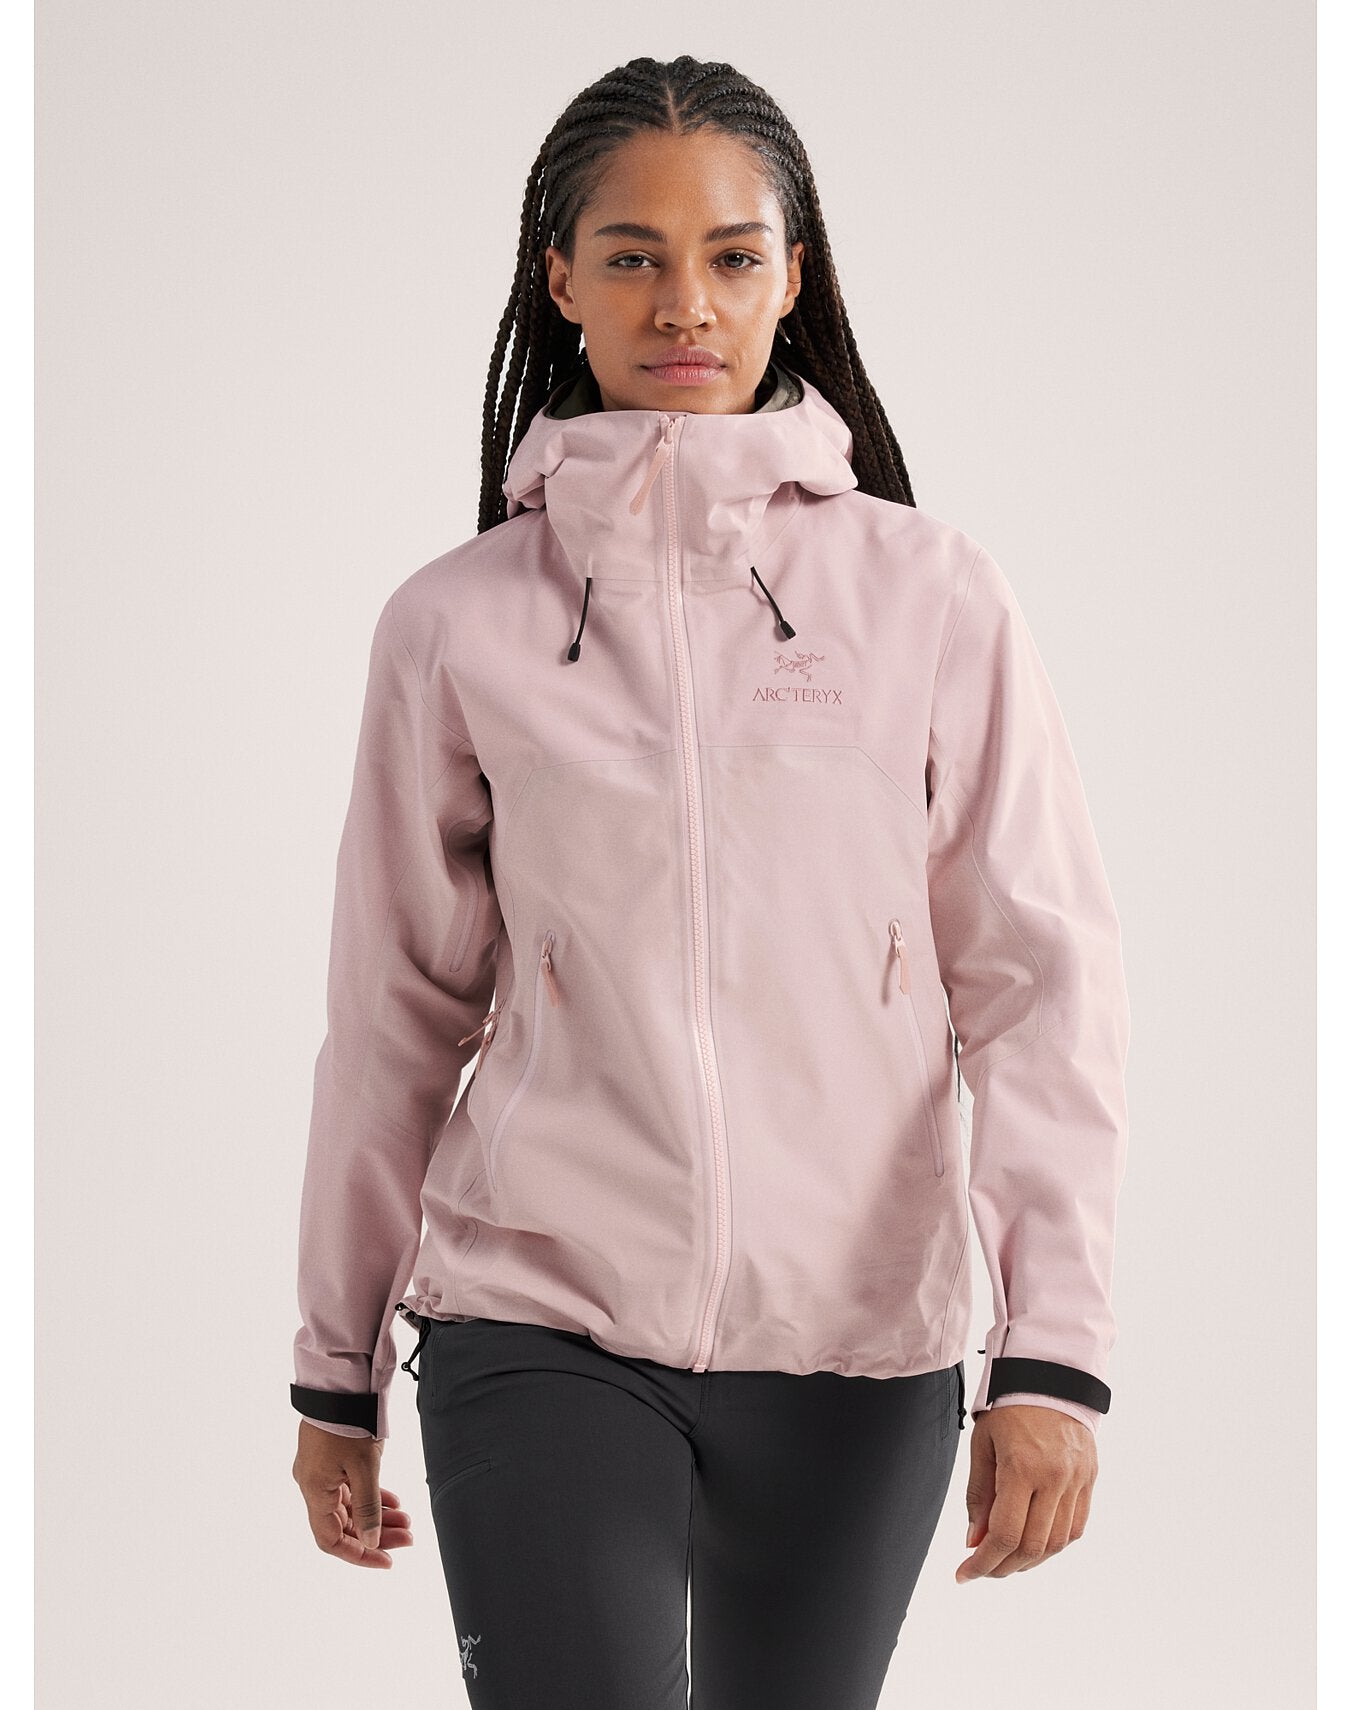 S24-X000006794-Beta-AR-Jacket-Stormhood-Alpine-Rose-Women-s-Front-View.jpg